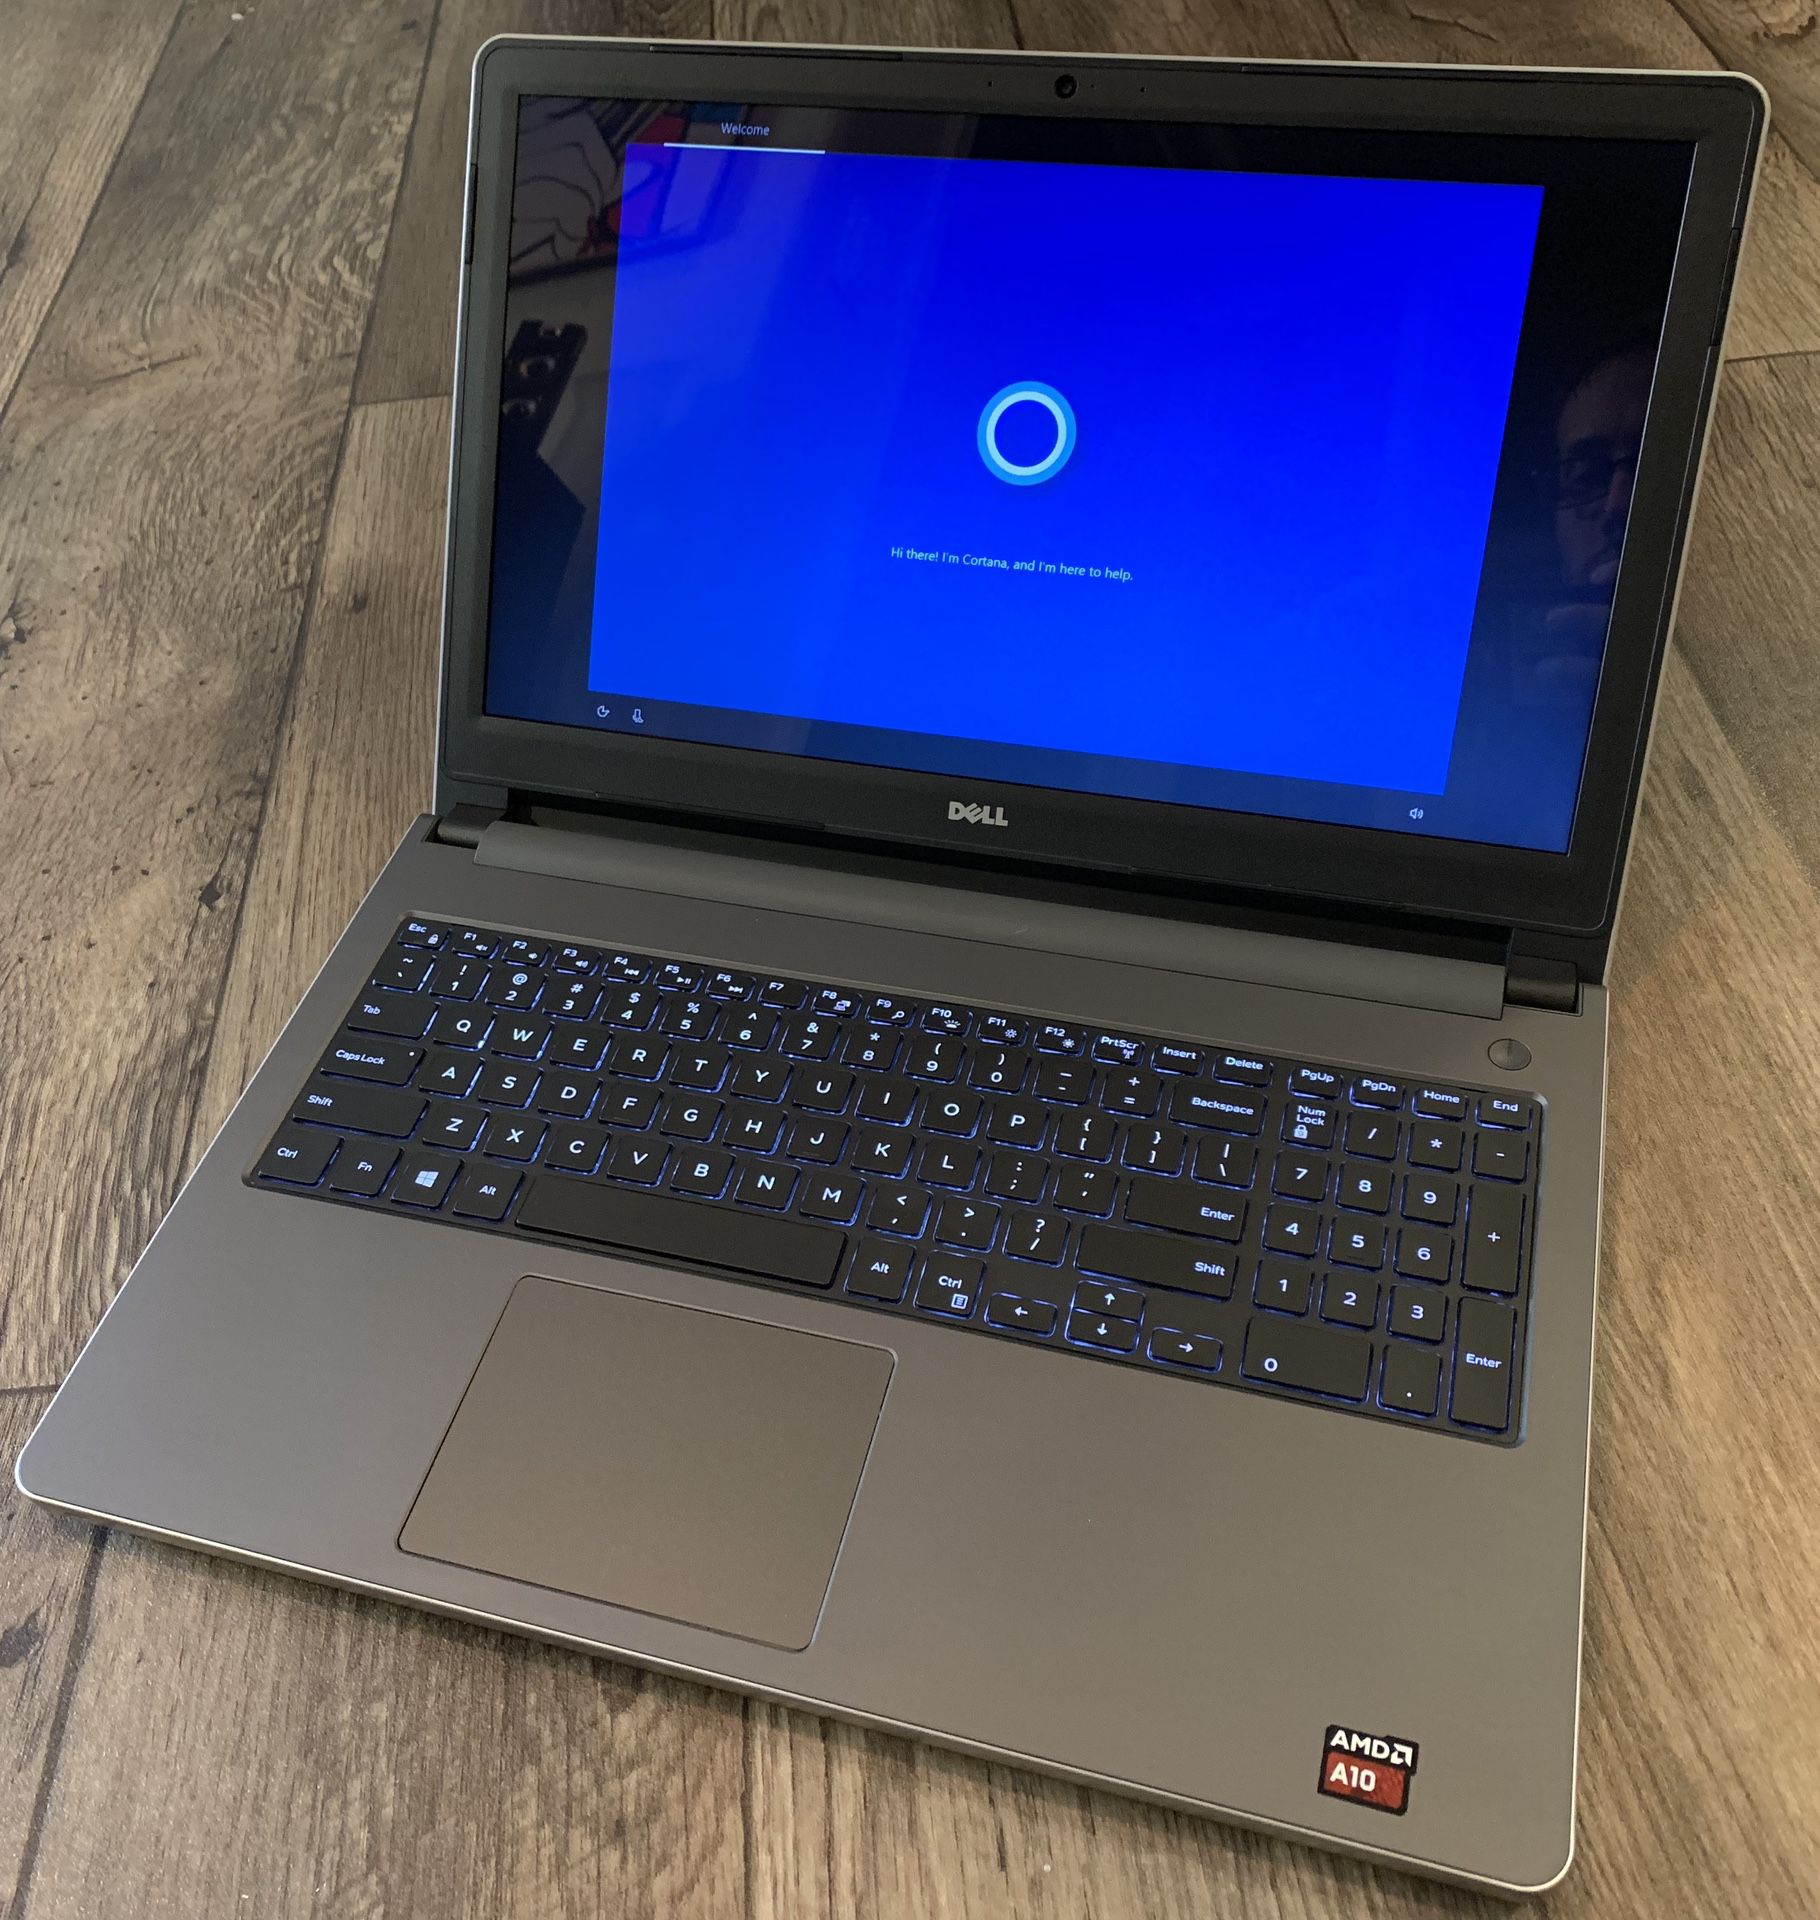 Dell Inspiron I5555 15.6” Touchscreen Windows 10 Notebook